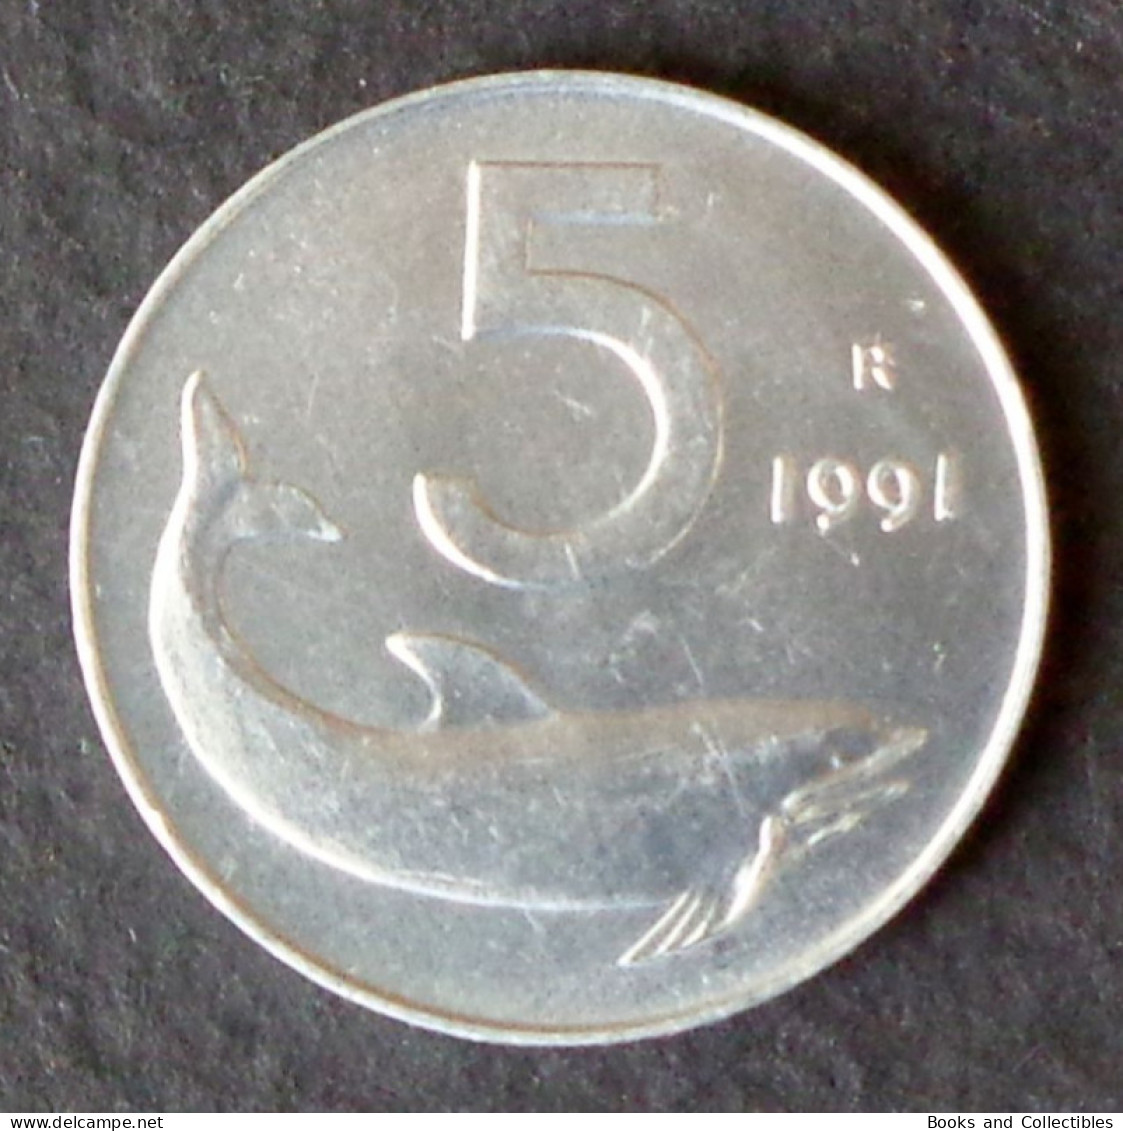 ITALY - 5 Lira 1991 - KM# 92 * Ref. 0196 - 5 Liras